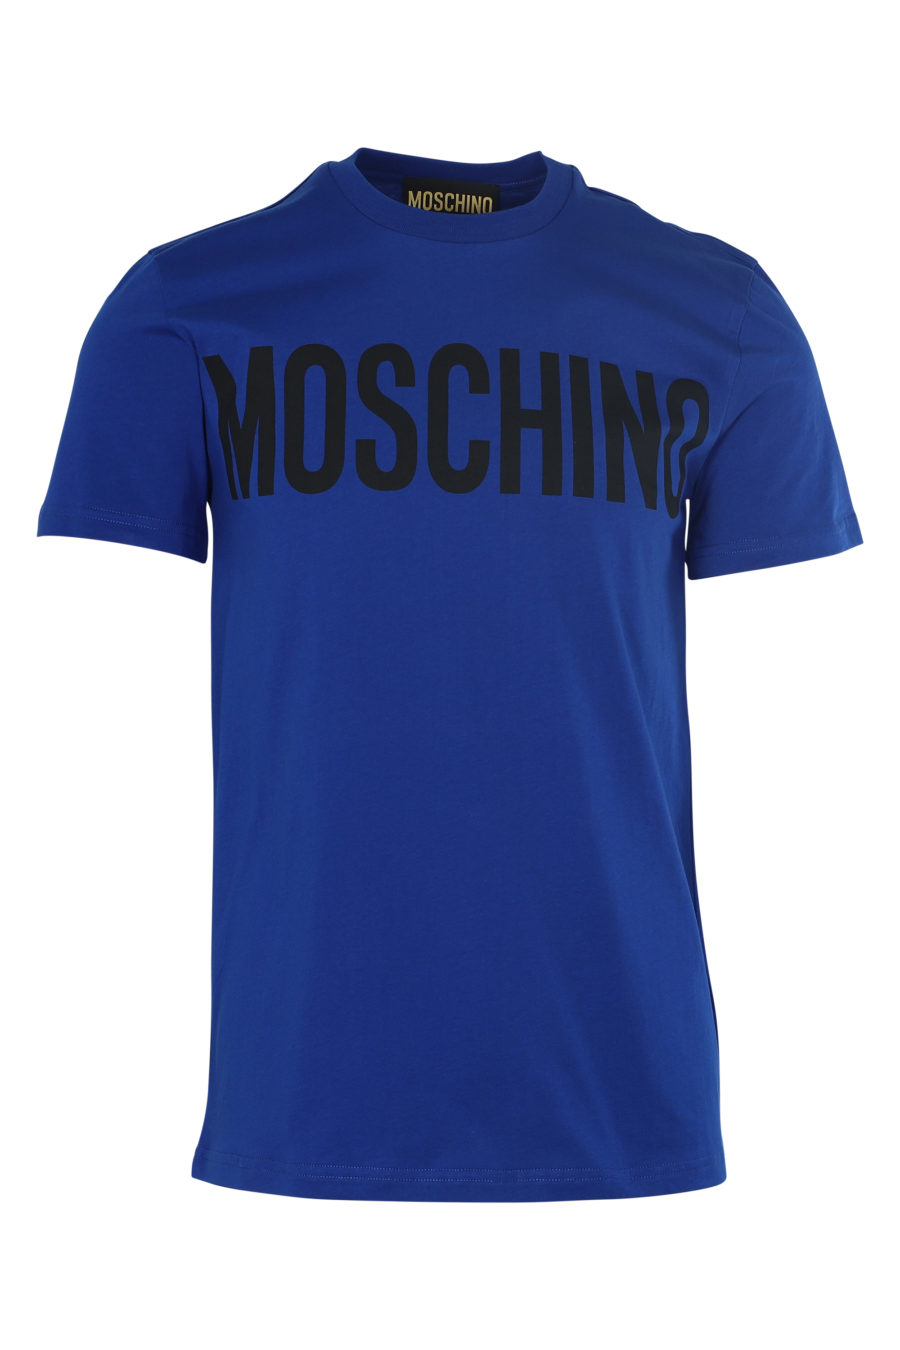 Camiseta azul con logo negro grande - IMG 6110